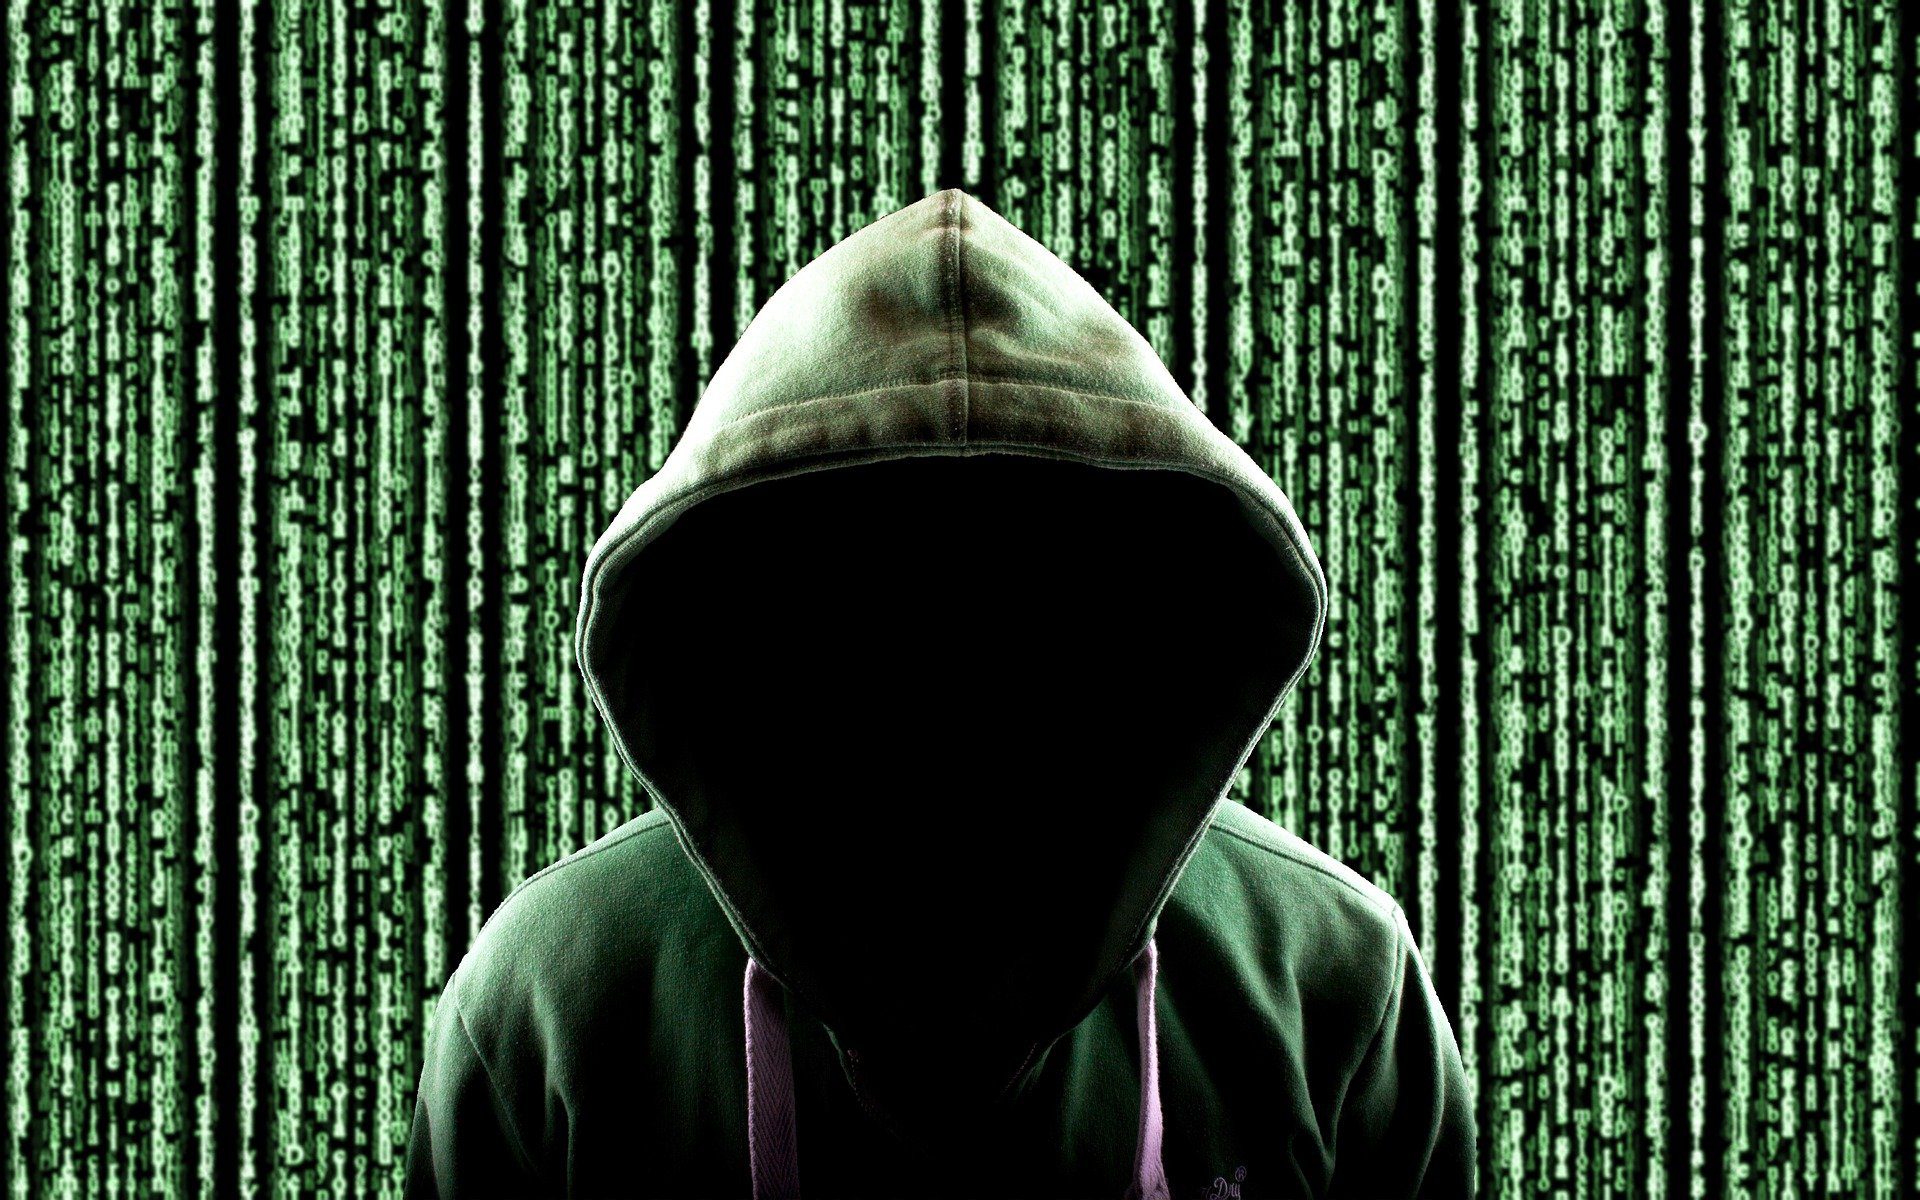 Frankrike: 3 kliniker drabbade av LockBit 2.0 ransomware